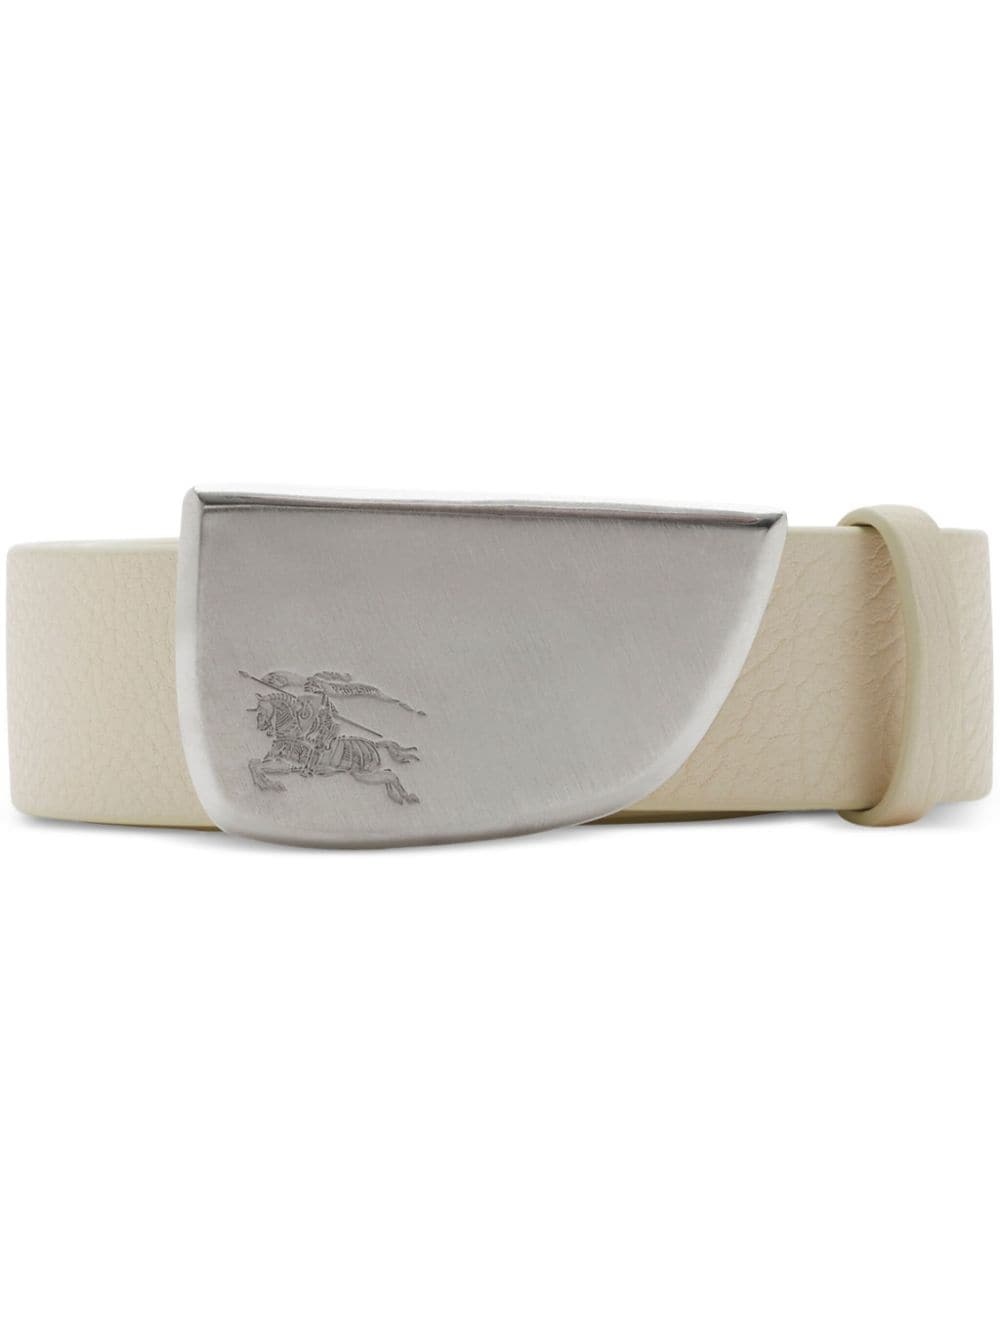 Shield leather belt - 1